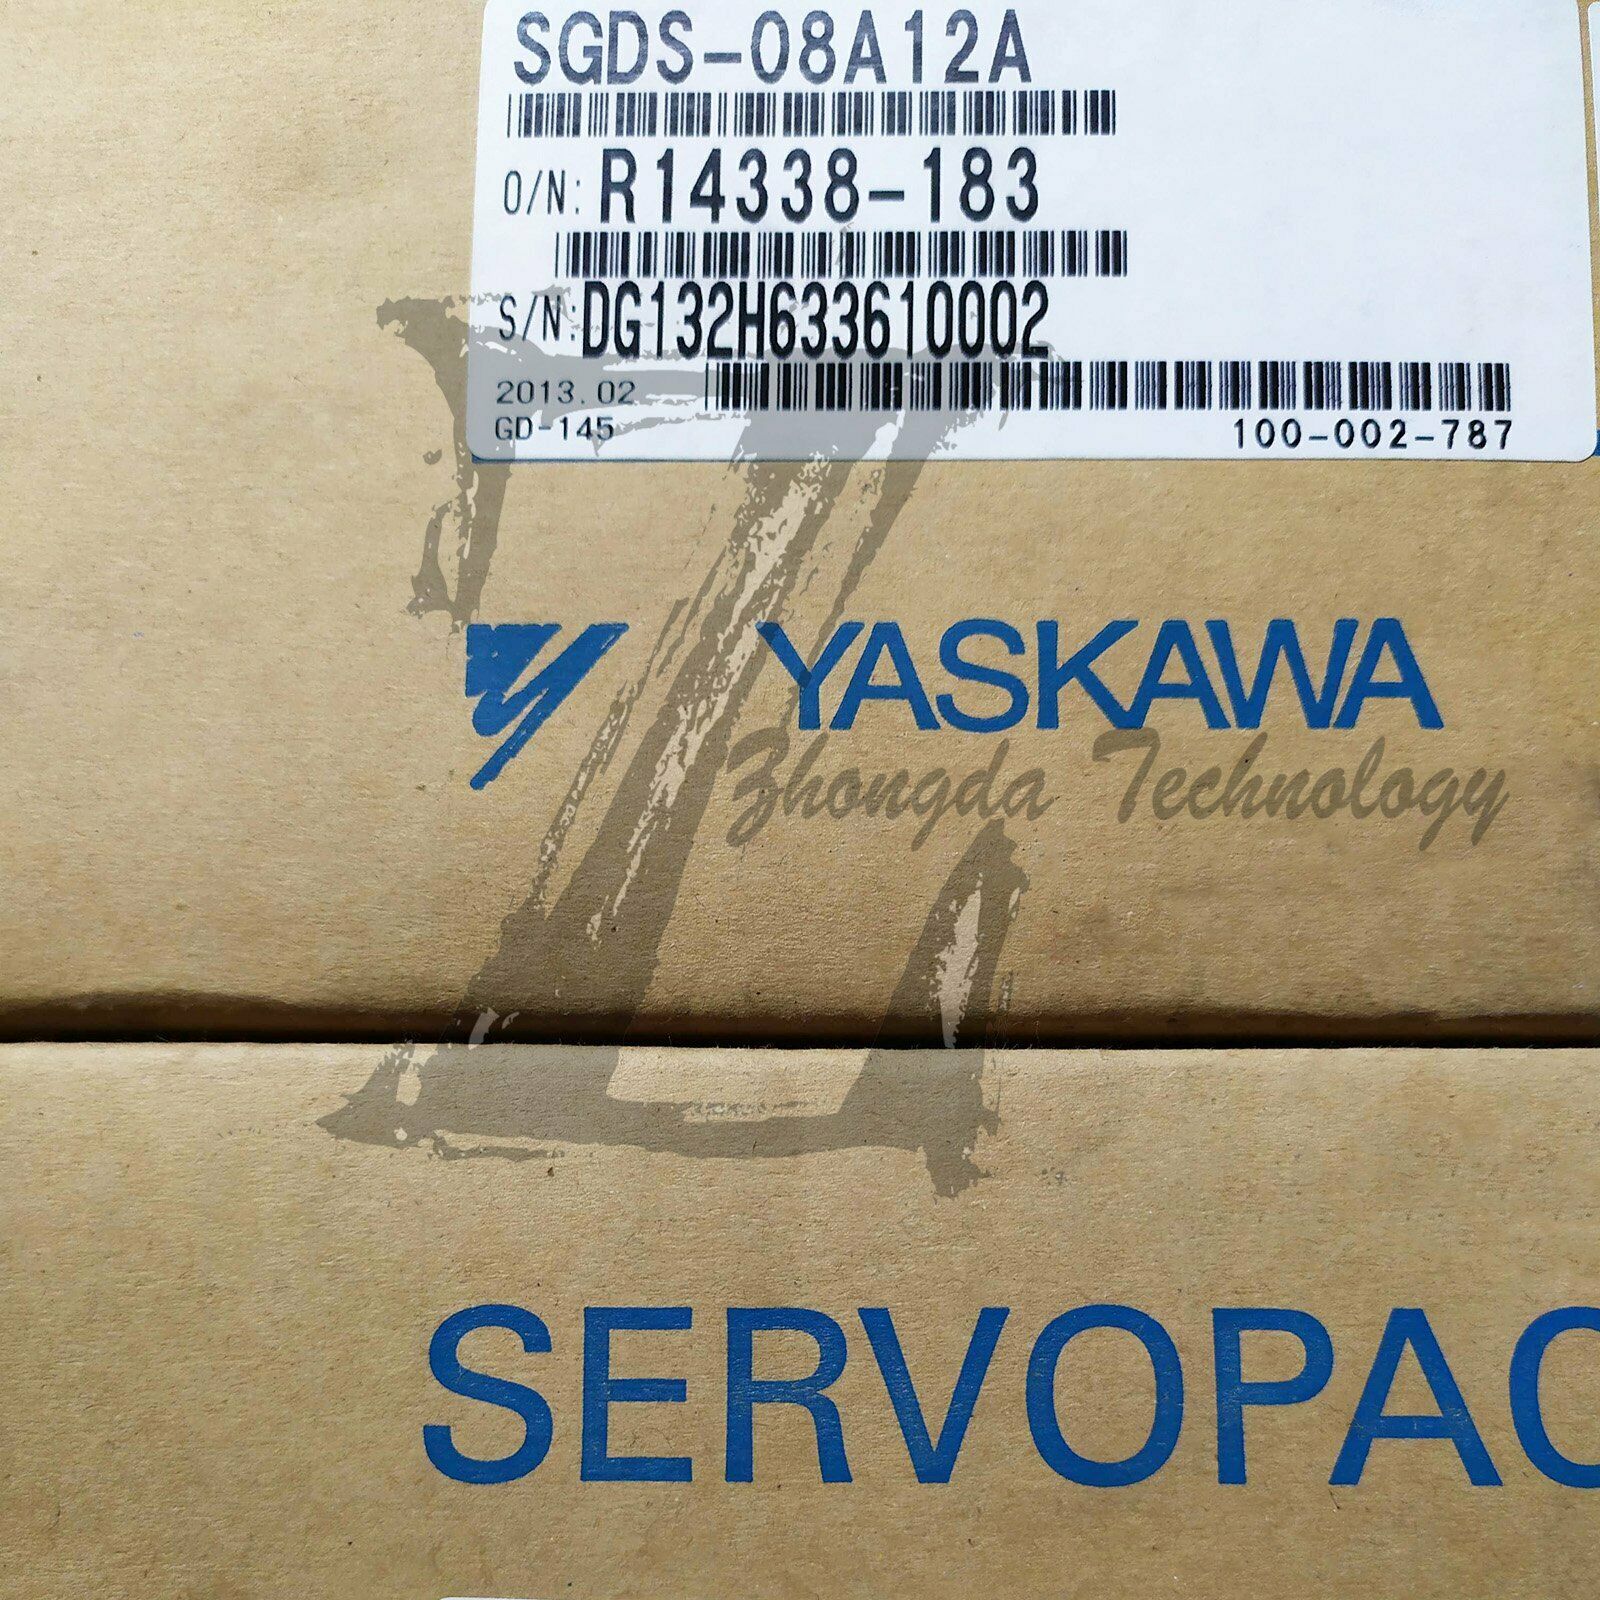 1pc new SGDS-08A12A Yaskawa servo drive one year warranty KOEED $500+, 80%, DRIVES, import_2020_10_10_031751, SGDH, YASKAWA